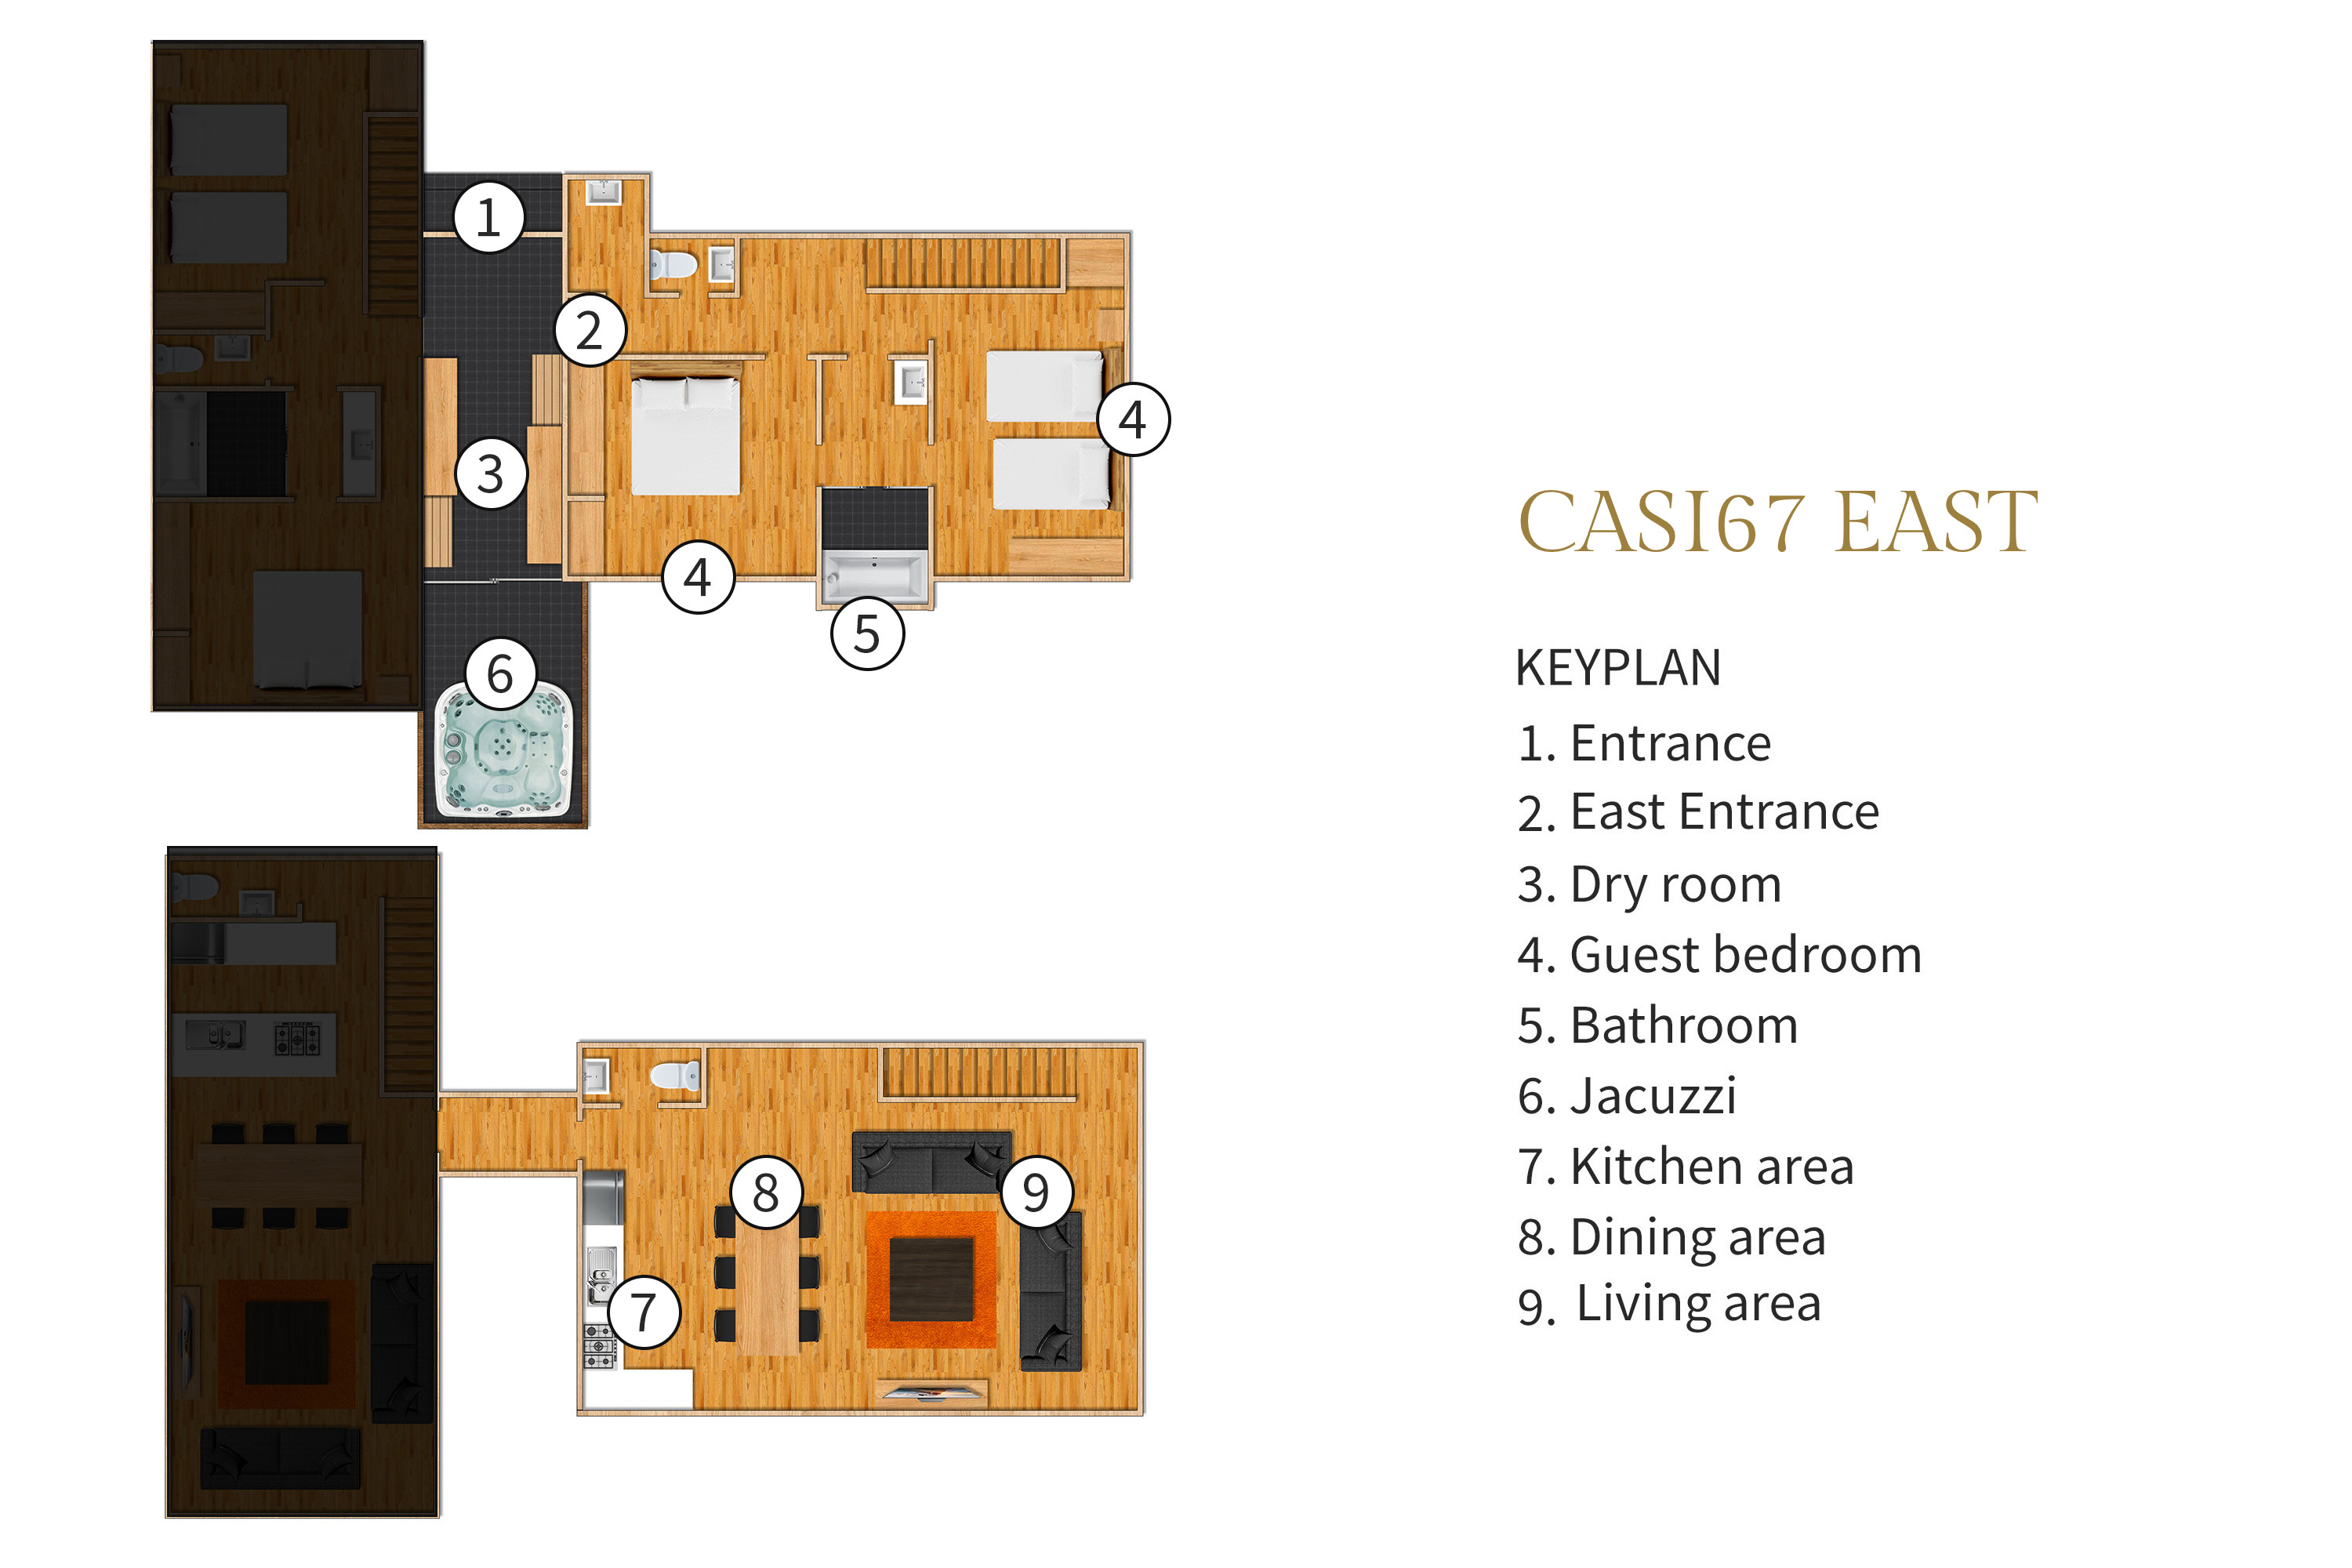 Casi67 East - Floorplan<br />